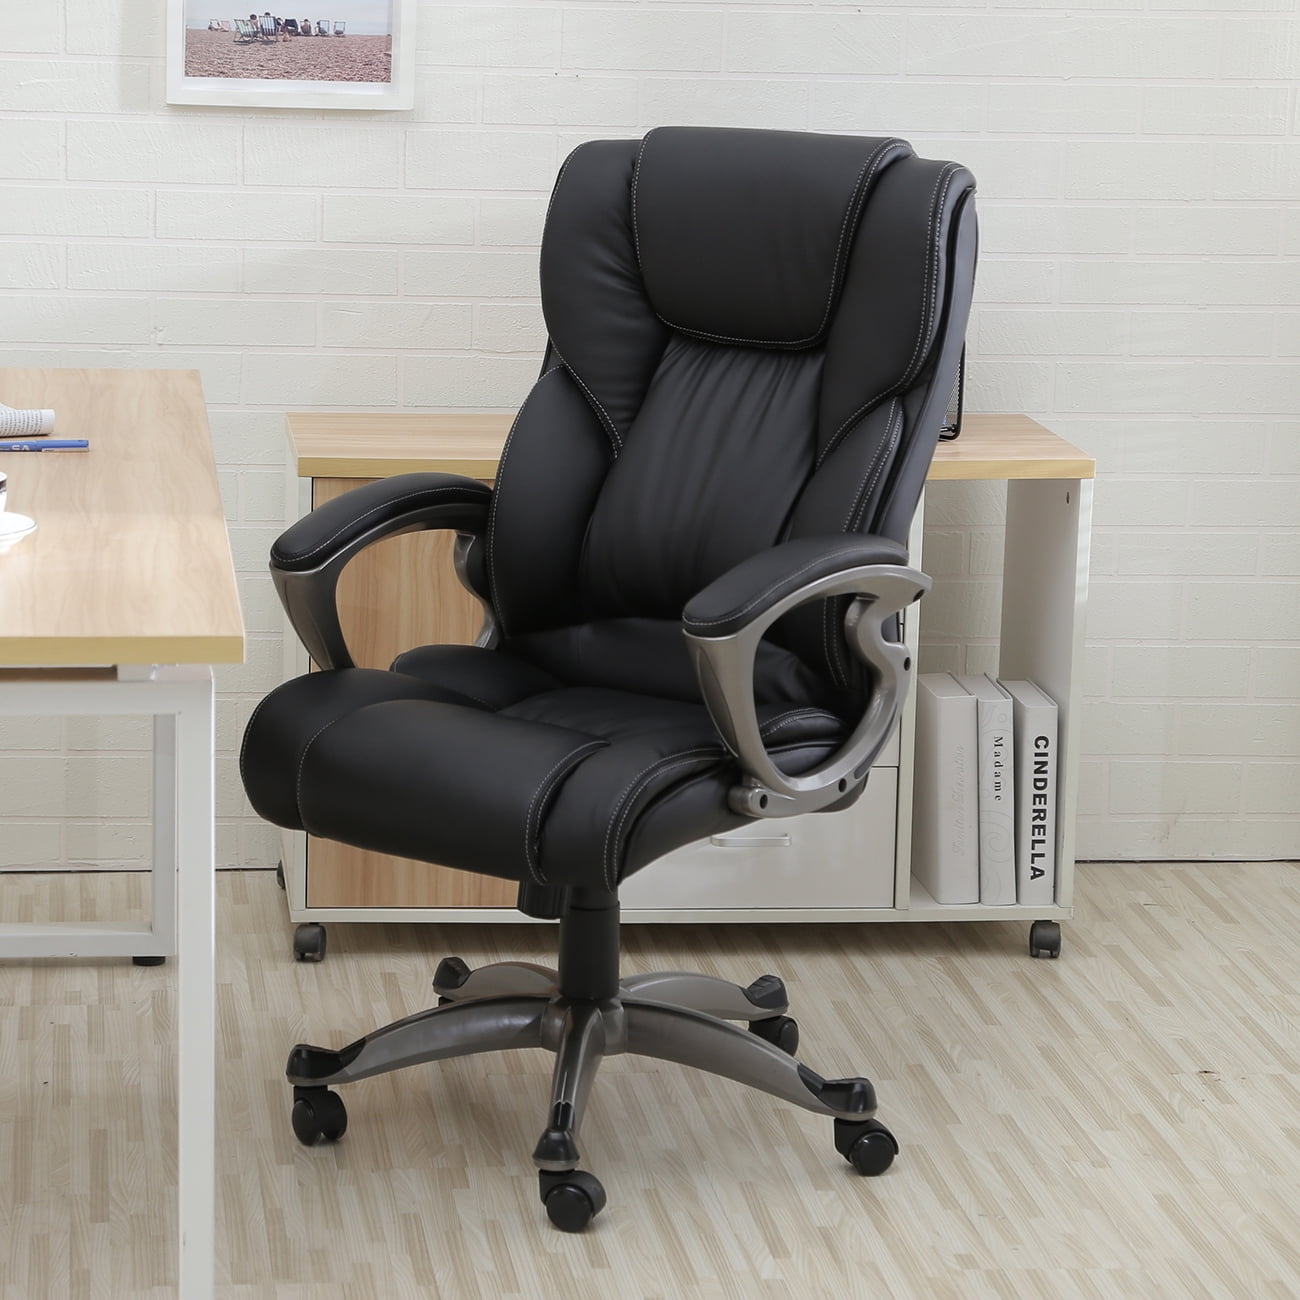 Belleze Executive Office Ergonomic, High Back Office Desk Chairs